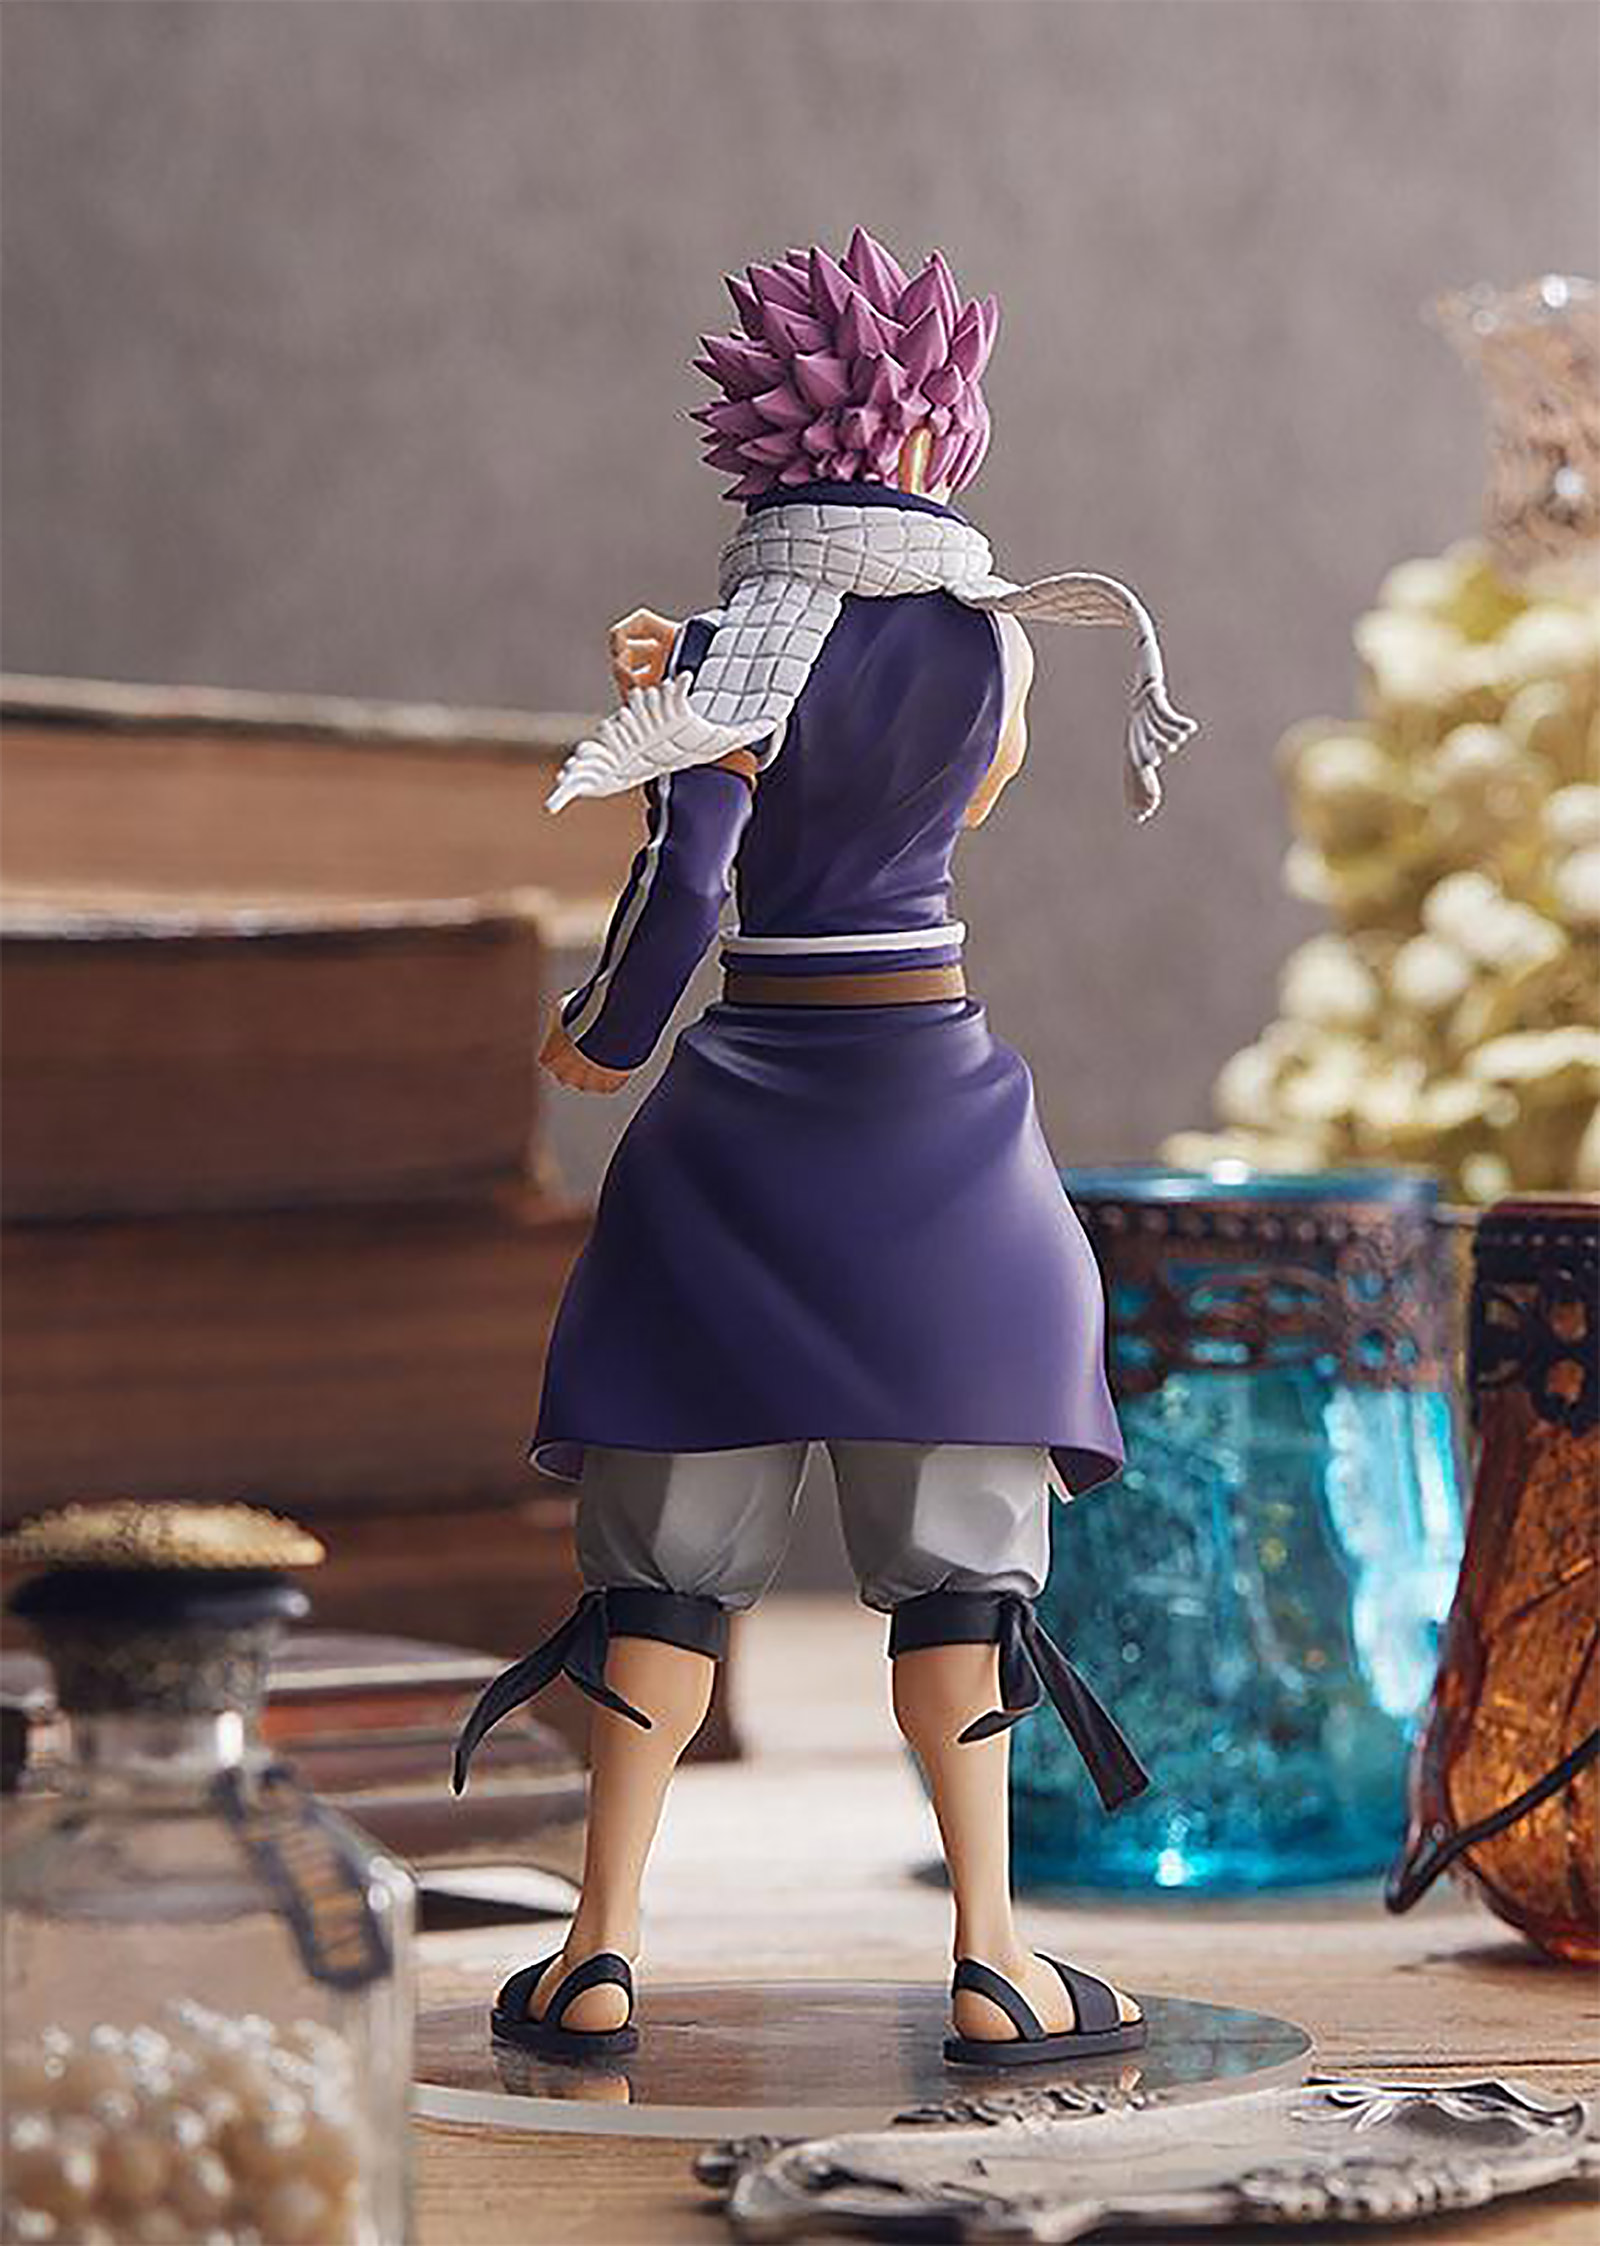 Fairy Tail - Natsu Dragneel Figur